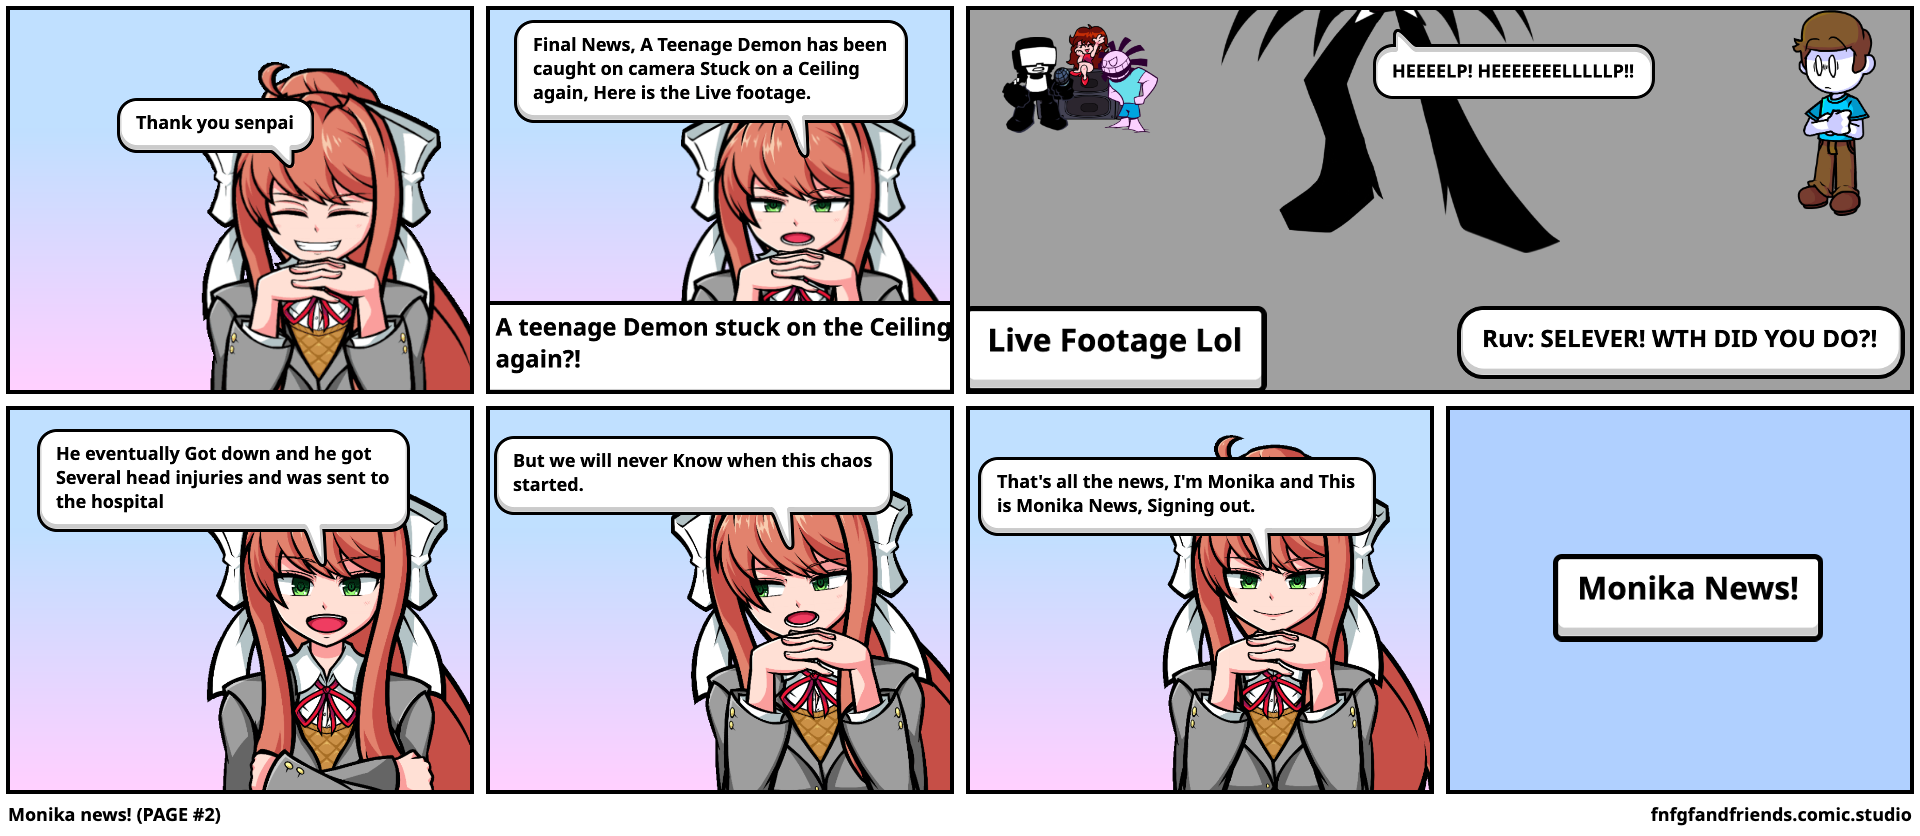 Monika news! (PAGE #2)